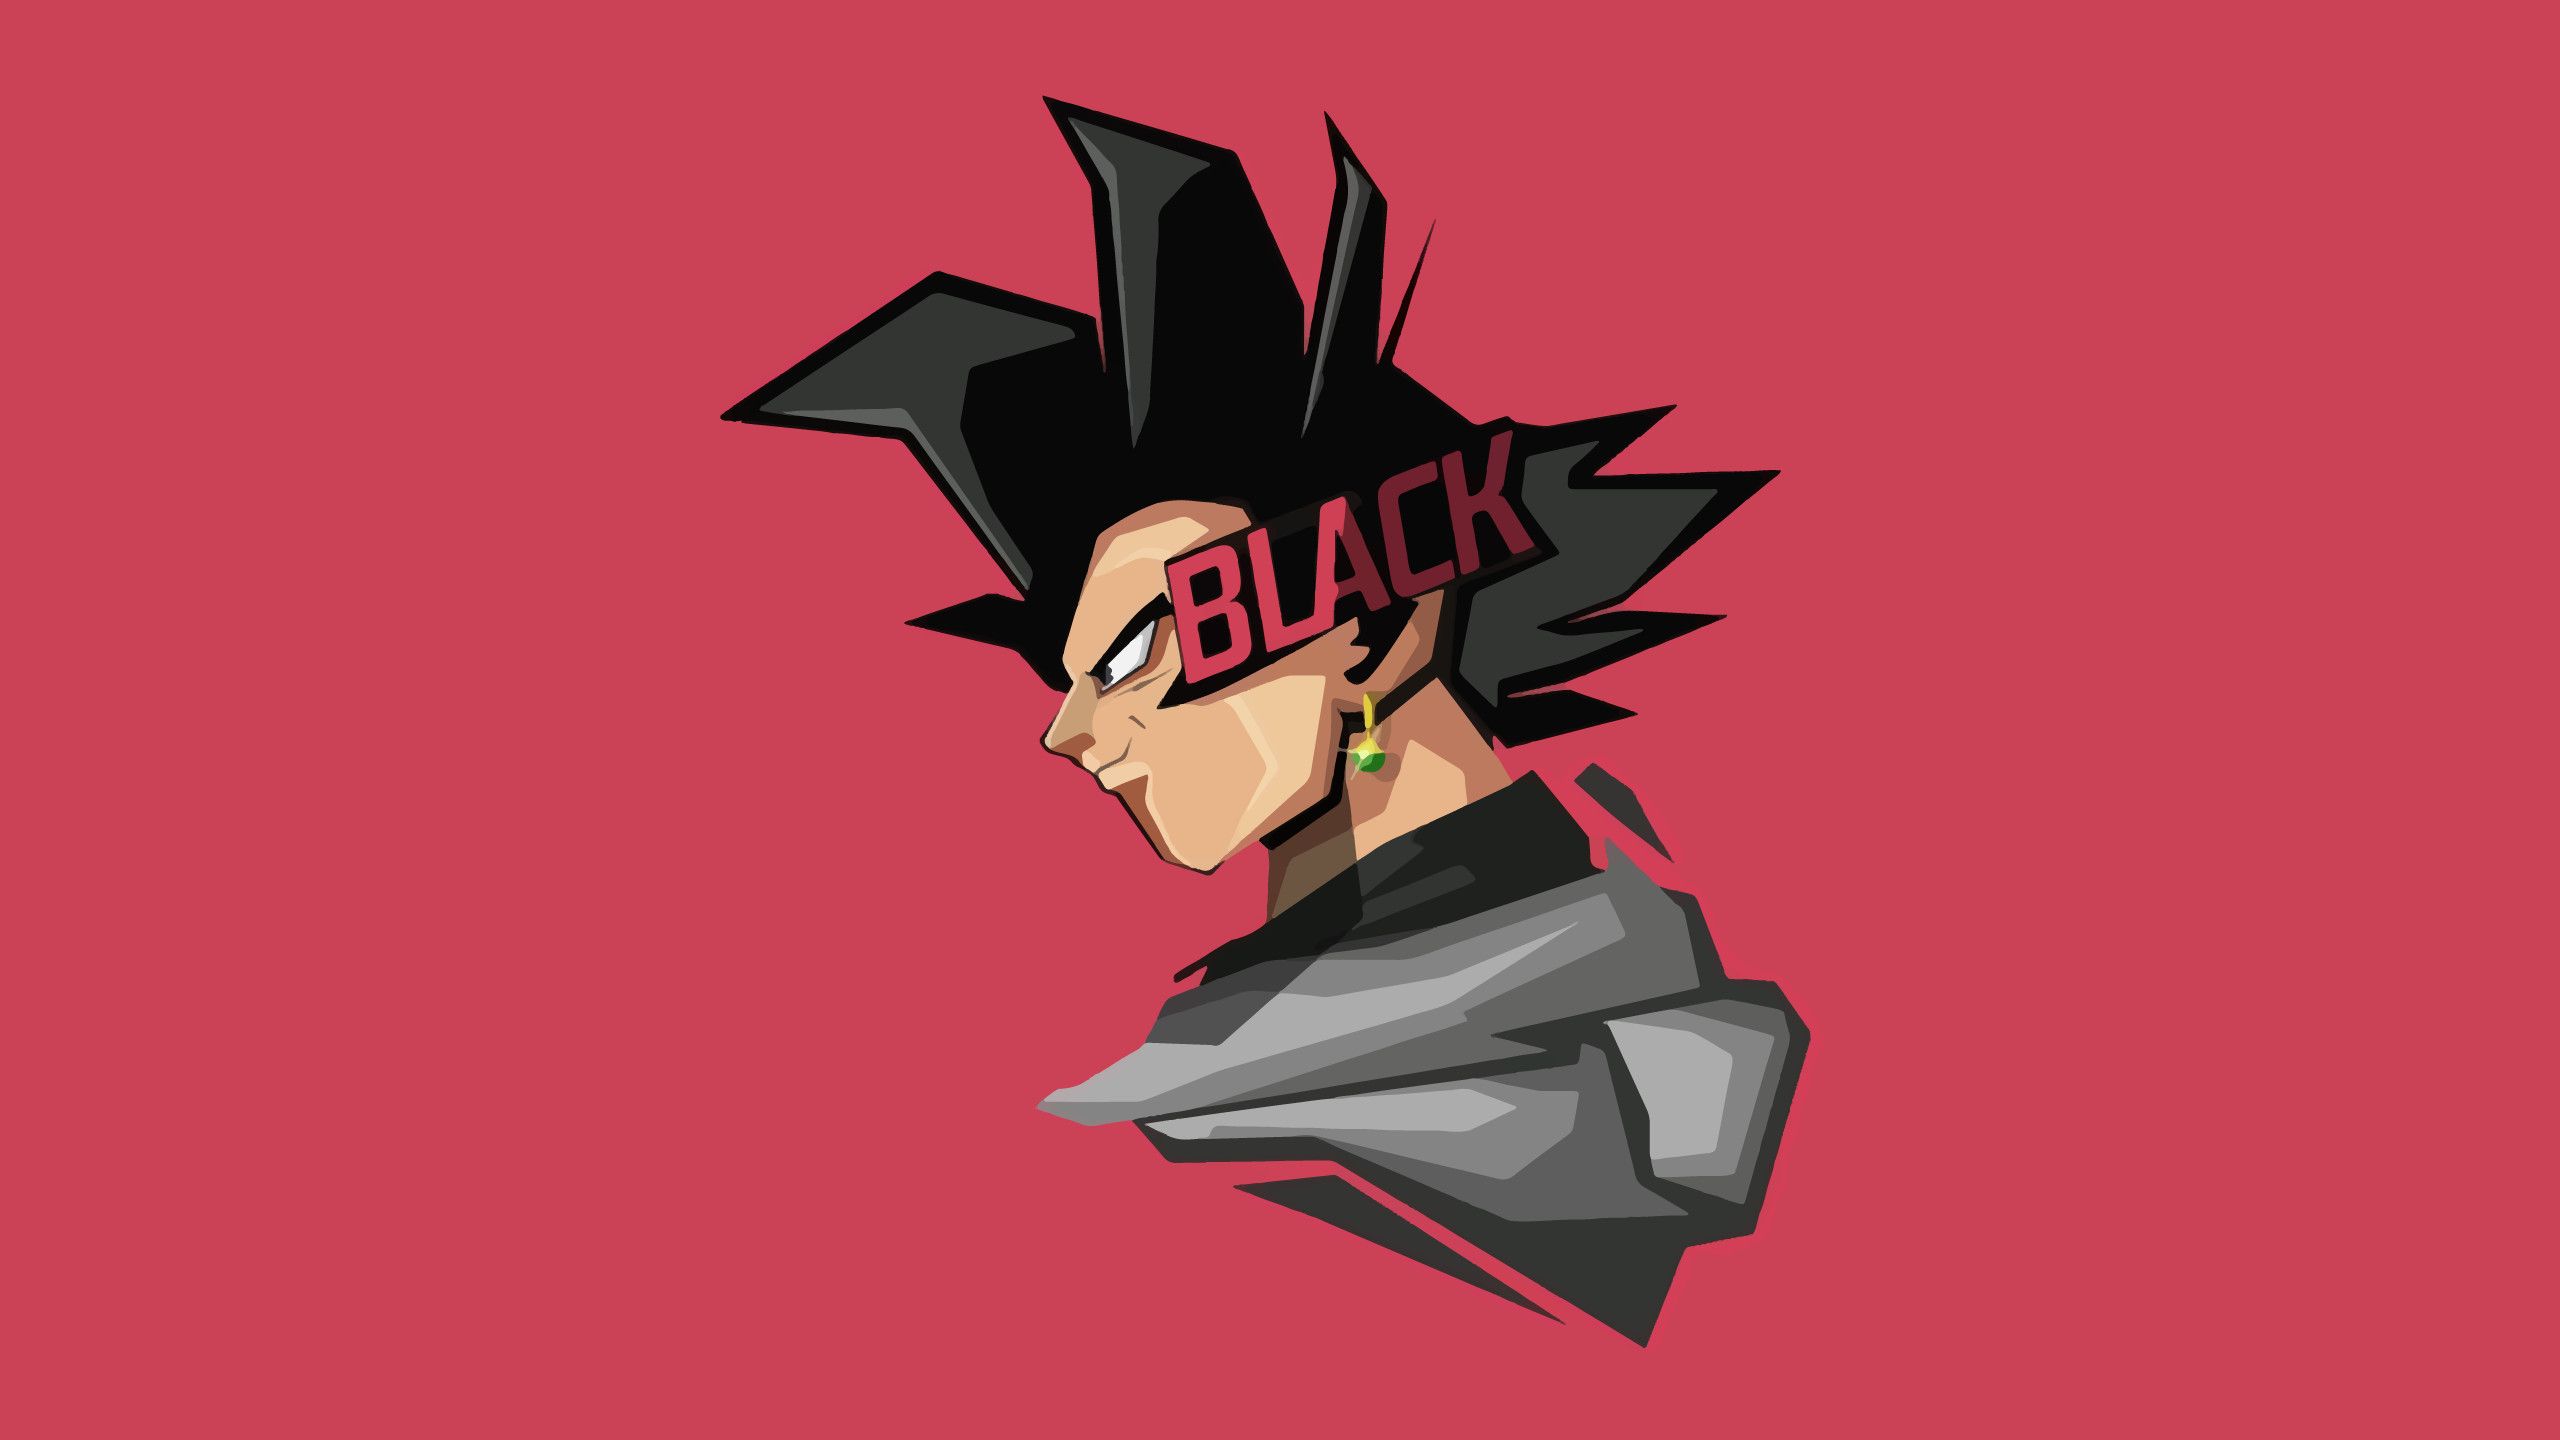 Goku black supreme wallpaper by CreepySilk - Download on ZEDGE™